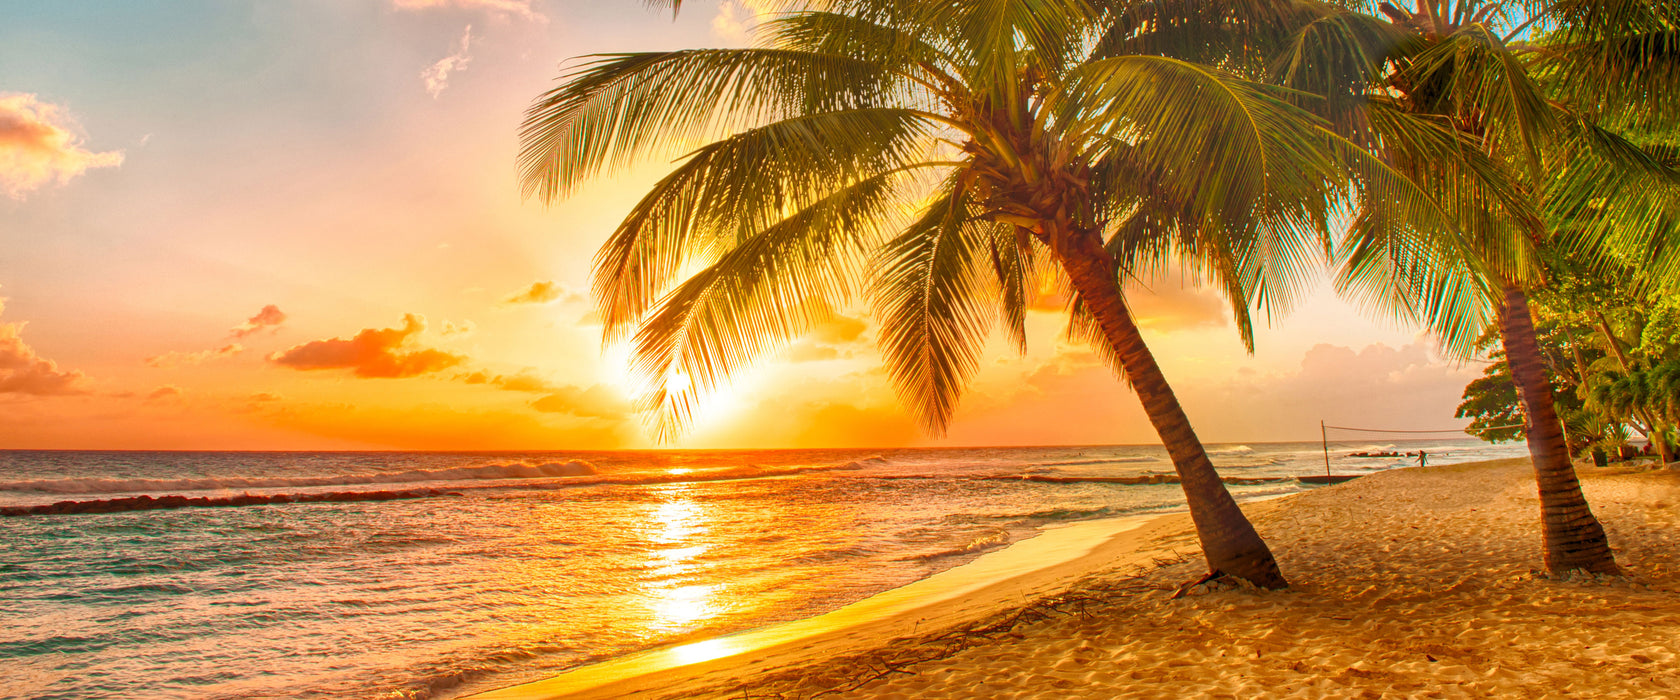 Palmen im Sonnenuntergang auf Barbados, Glasbild Panorama